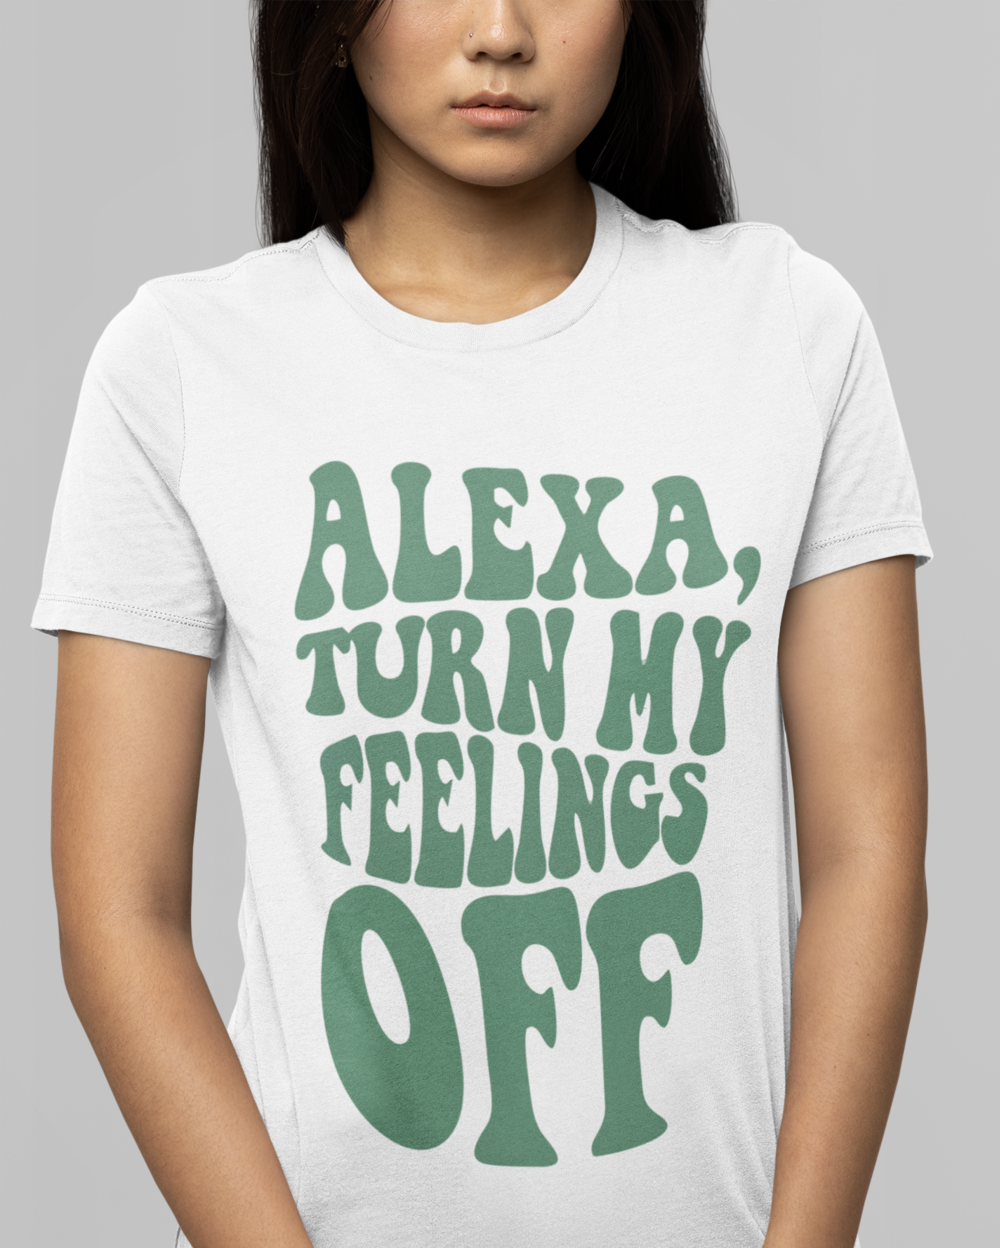 Alexa, Turn My Feelings Off